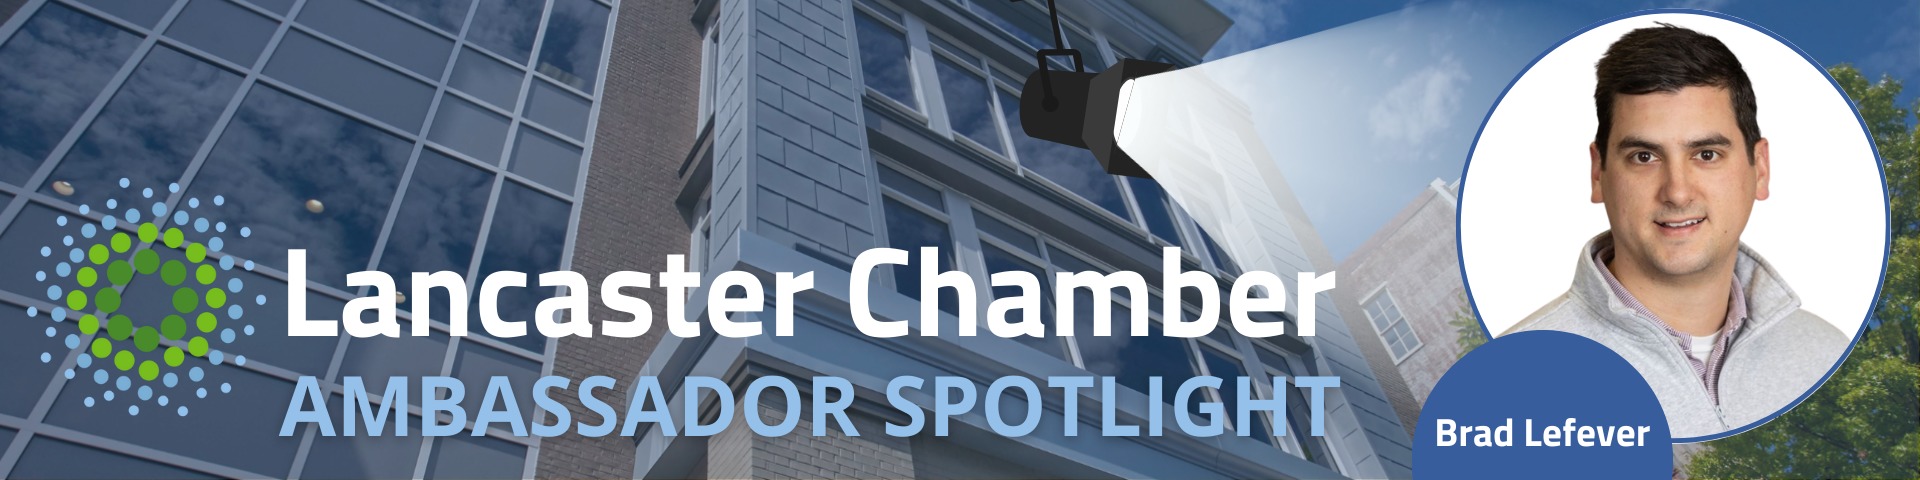 Lancaster Chamber Ambassador Spotlight Q&A: Brad Lefever